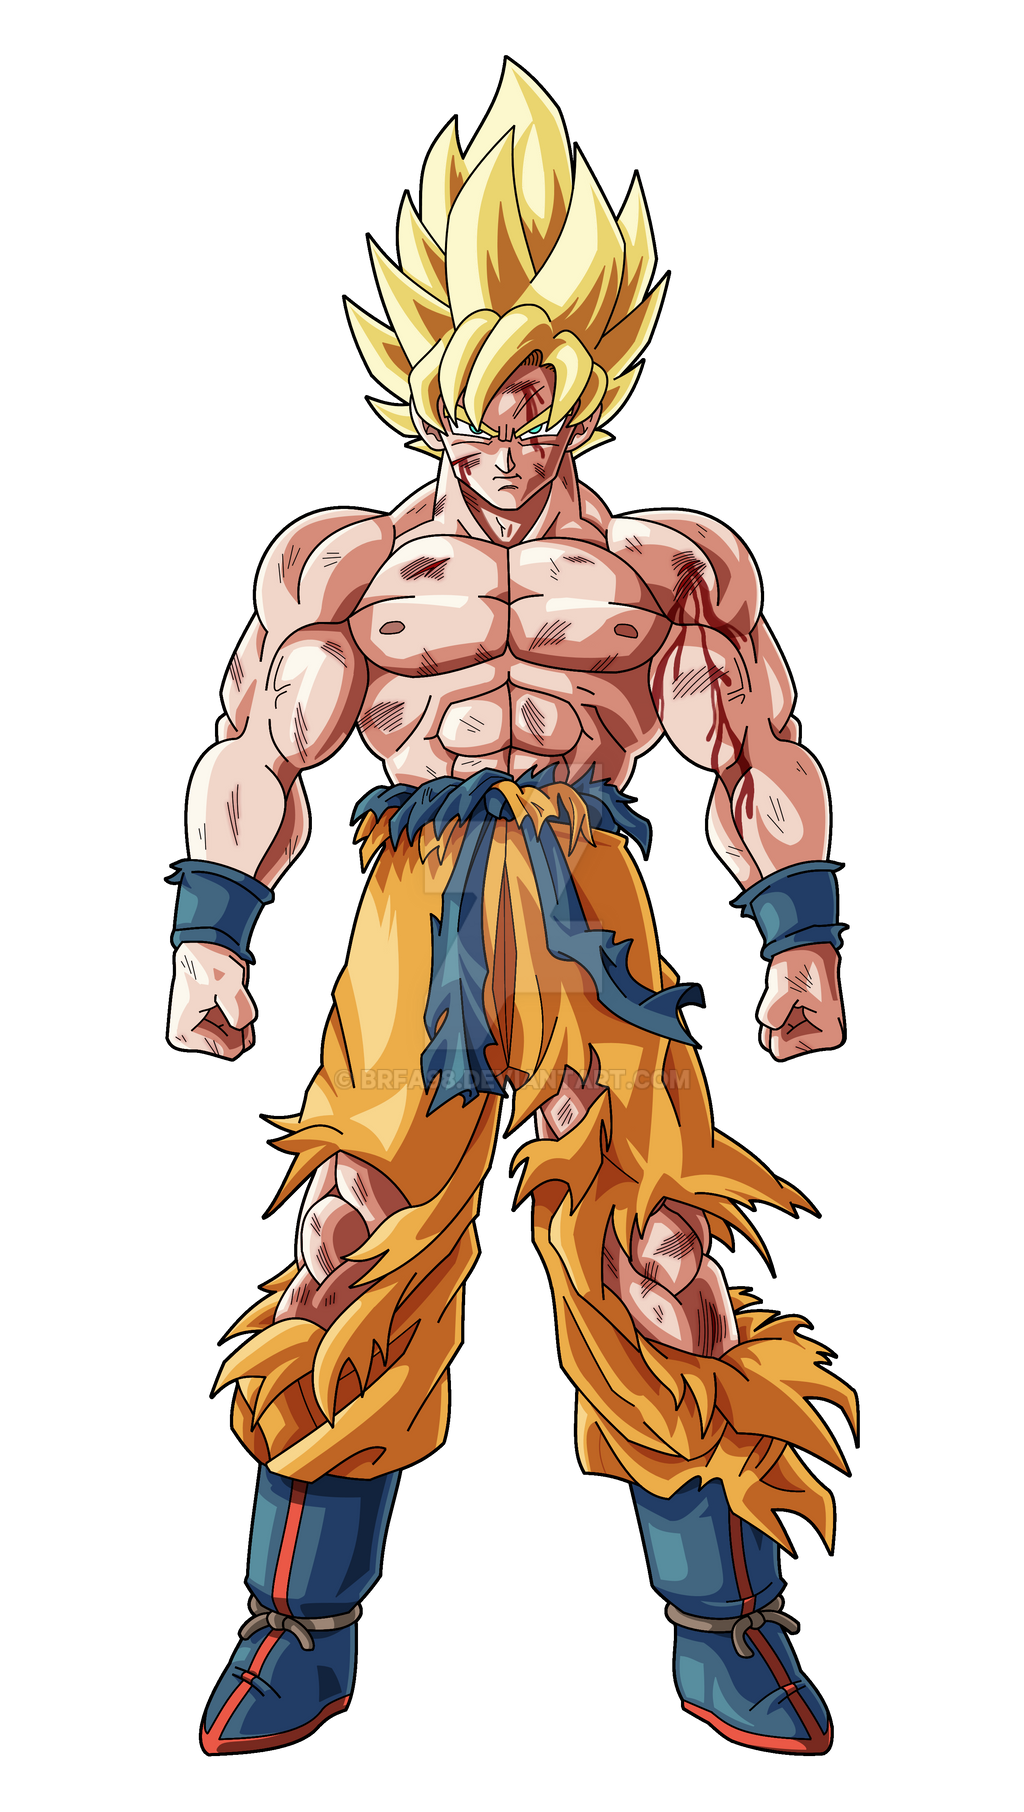 Super Saiyan Goku by brfa98 on DeviantArt